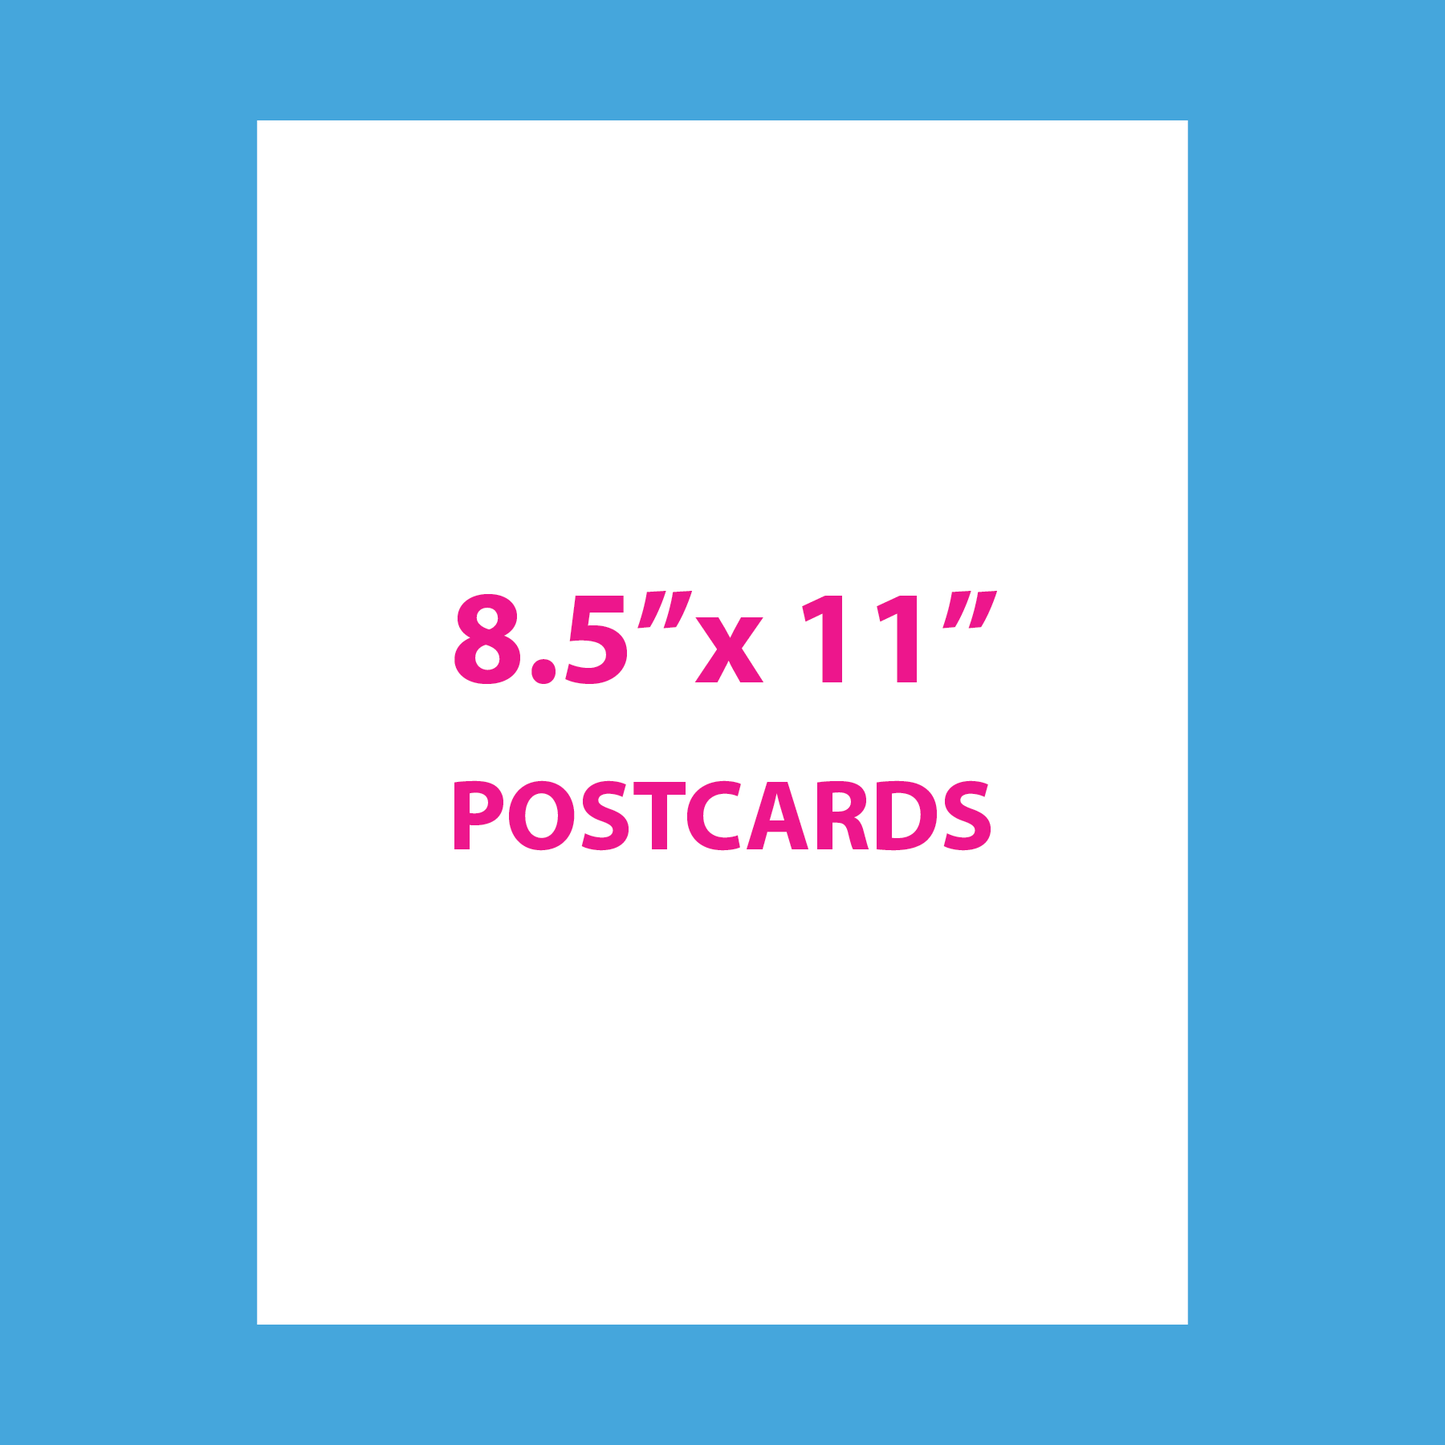 8.5" x 11" Postcards